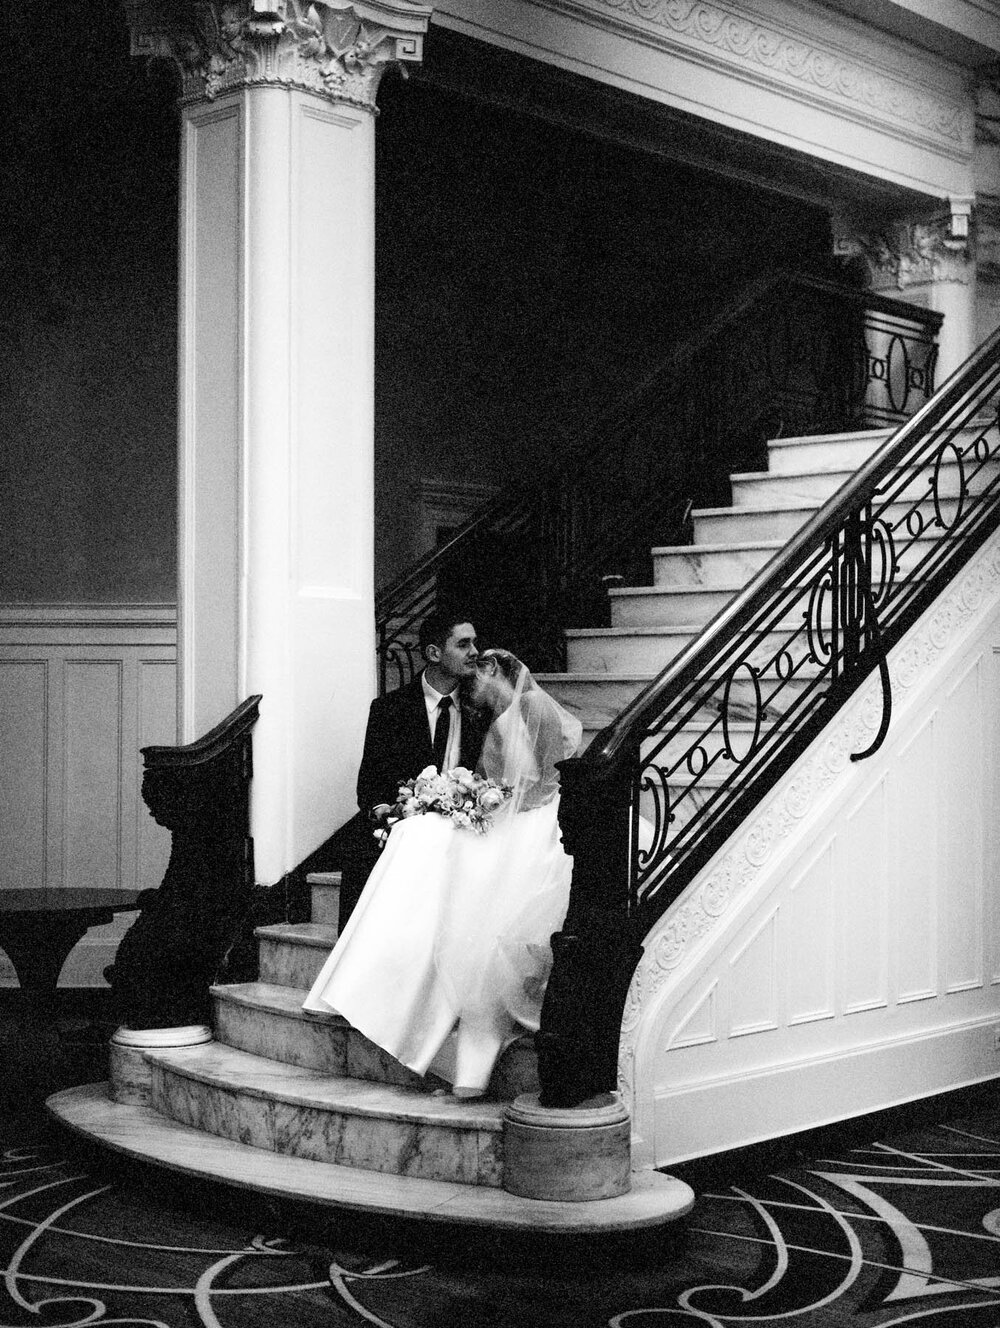 Lynchburg-wedding-weddingphotographer-film-atelier-mircowedding-love-lynchburgphotographer-58.jpg